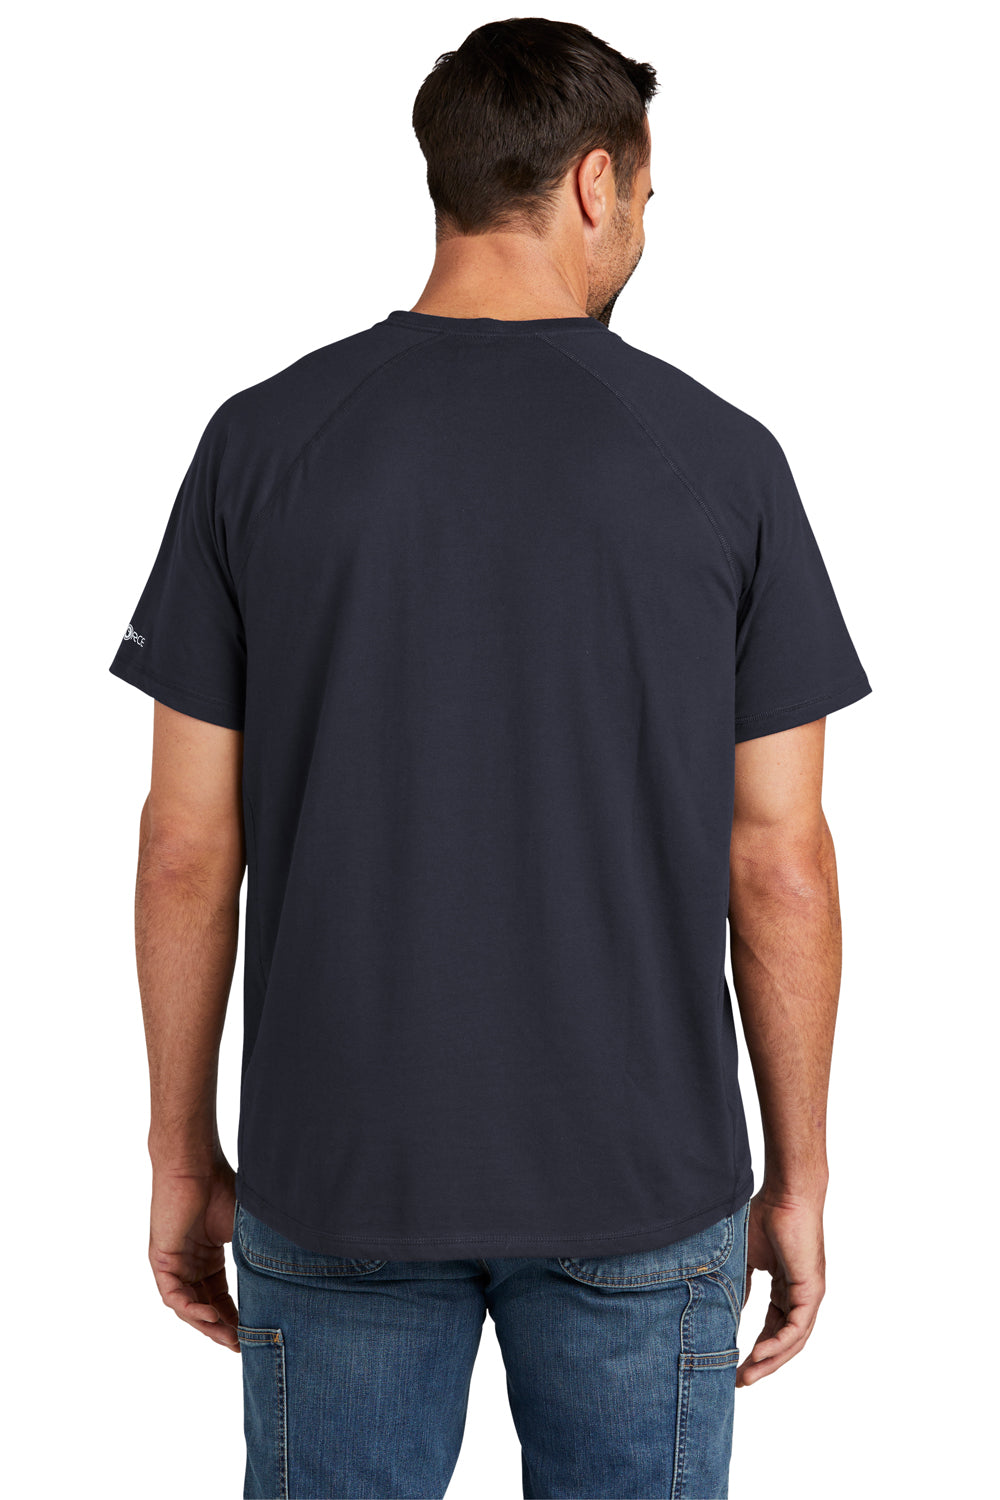 Carhartt CT104616 Mens Force Moisture Wicking Short Sleeve Crewneck T-Shirt w/ Pocket Navy Blue Model Back